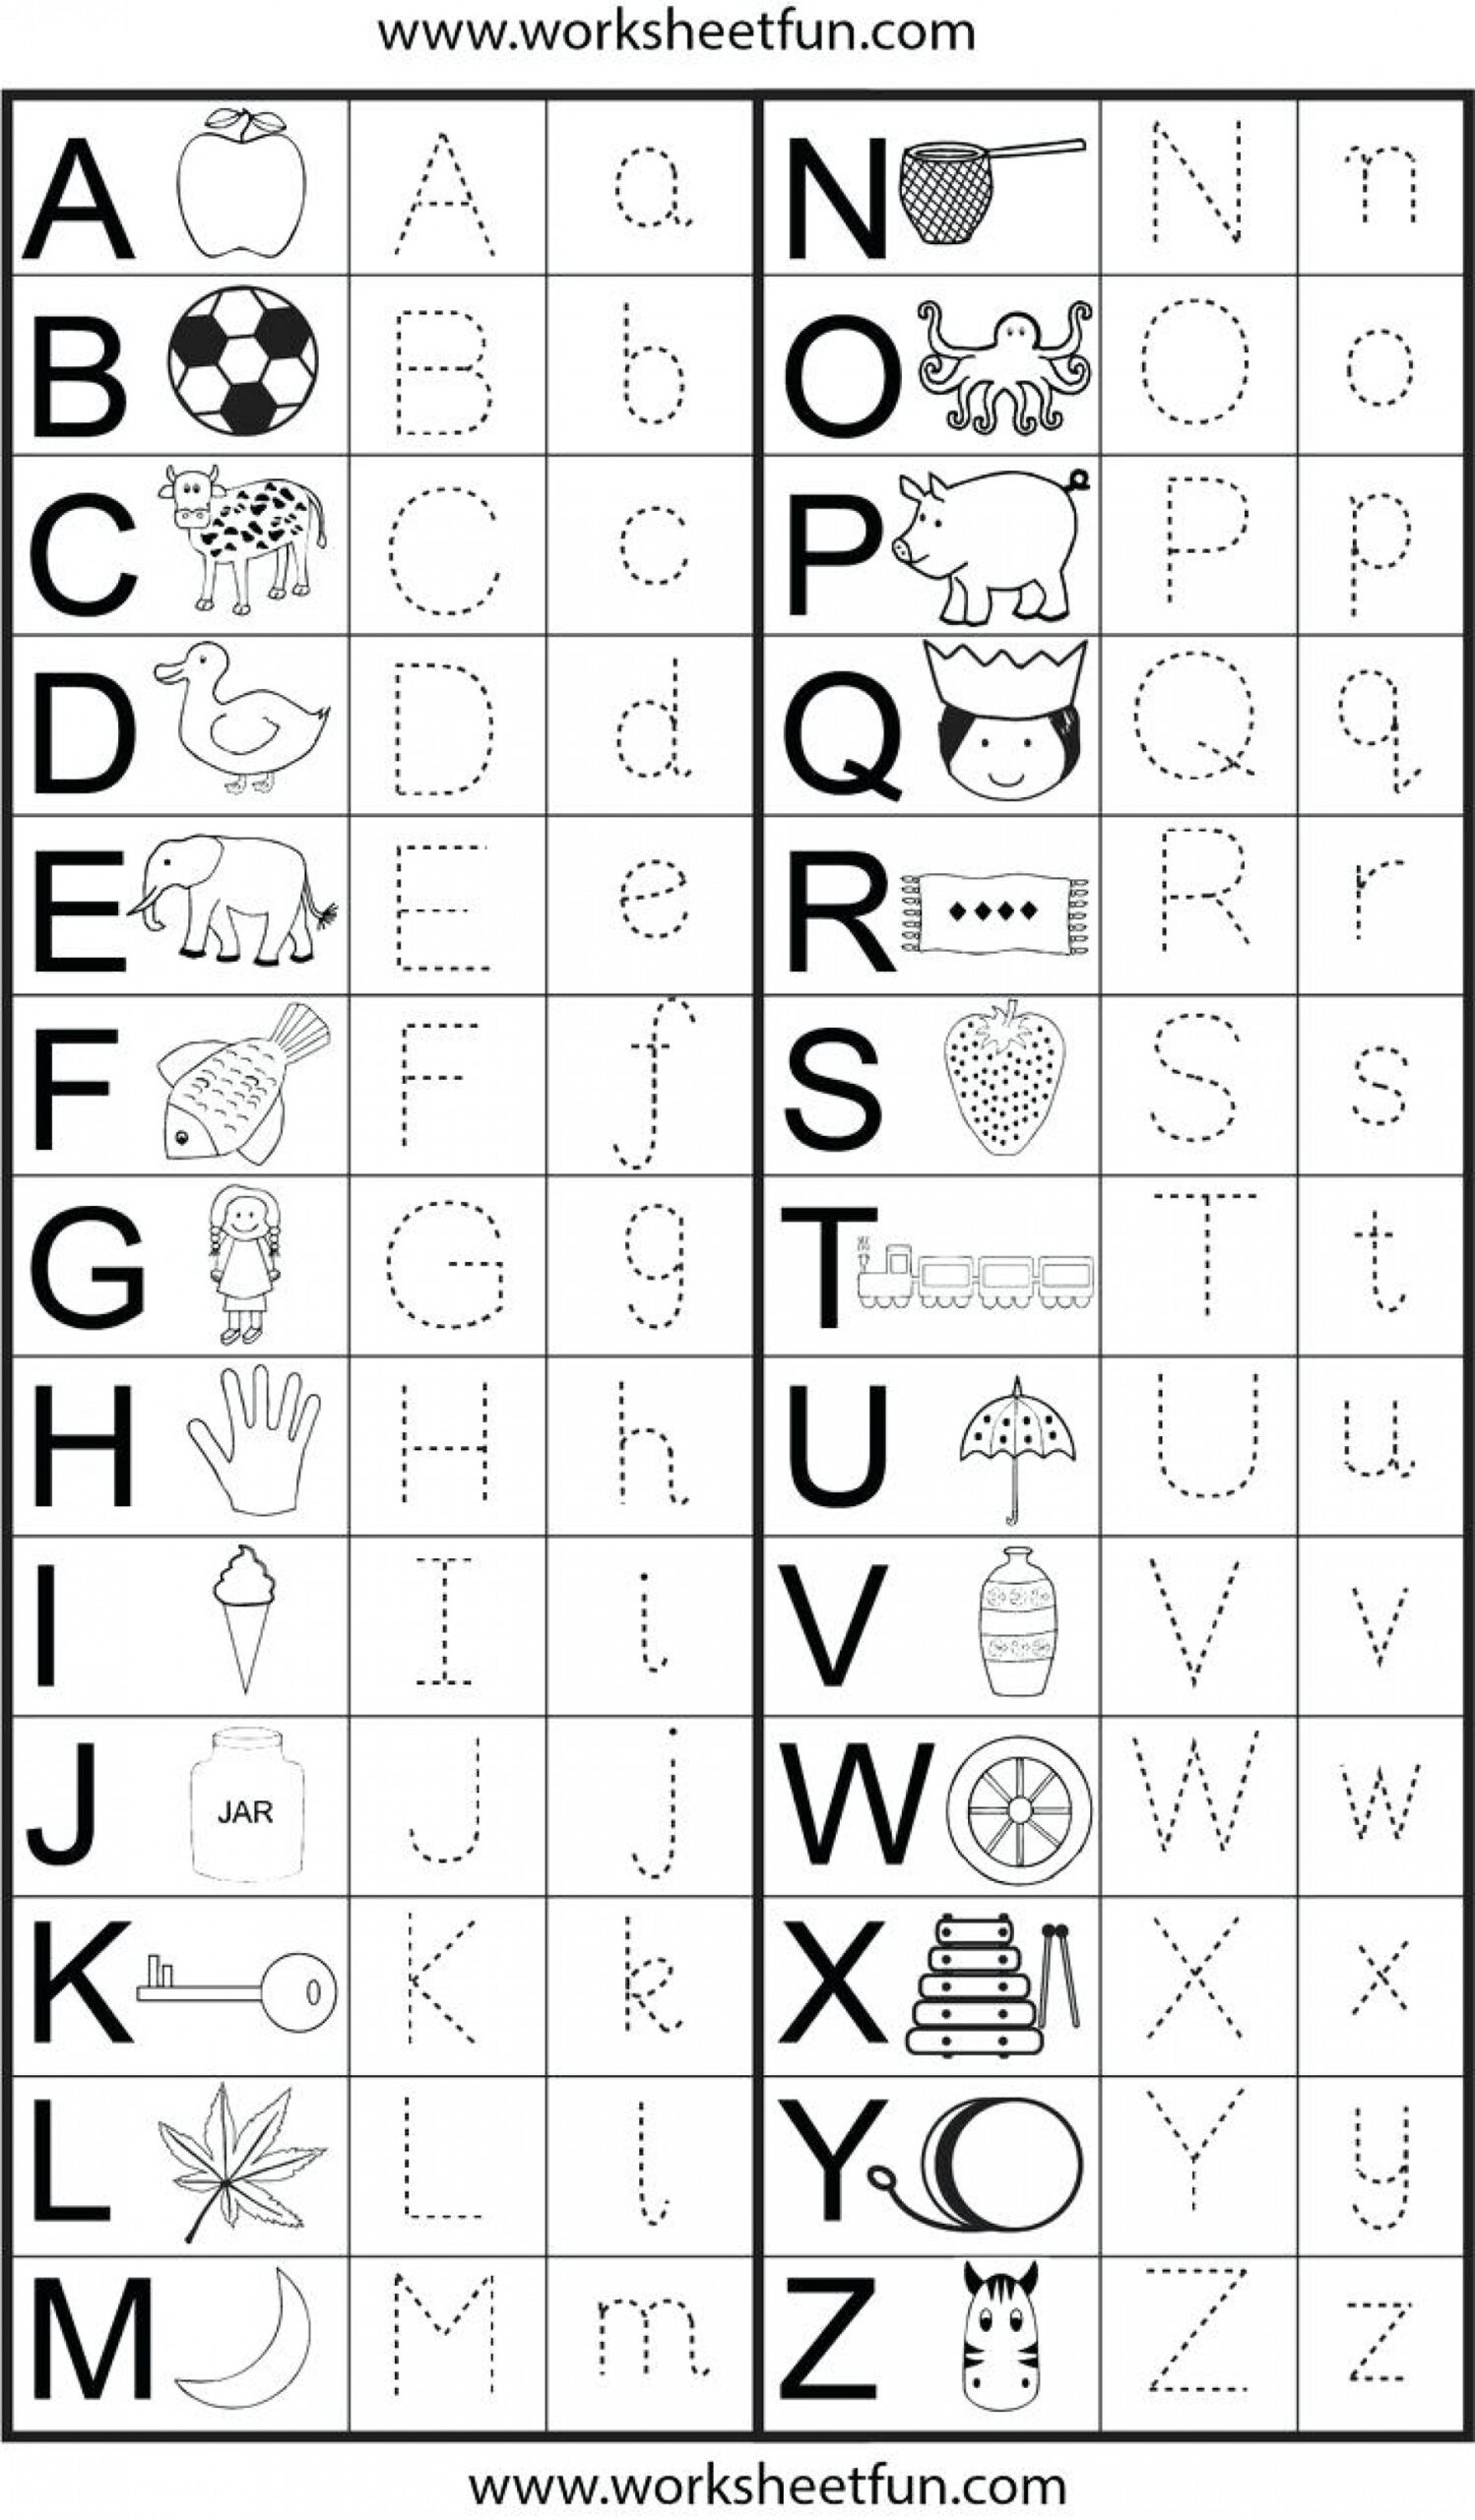 Alphabet Exercises For Kindergarten Pdf - Clover Hatunisi in Alphabet Worksheets For Kindergarten Pdf